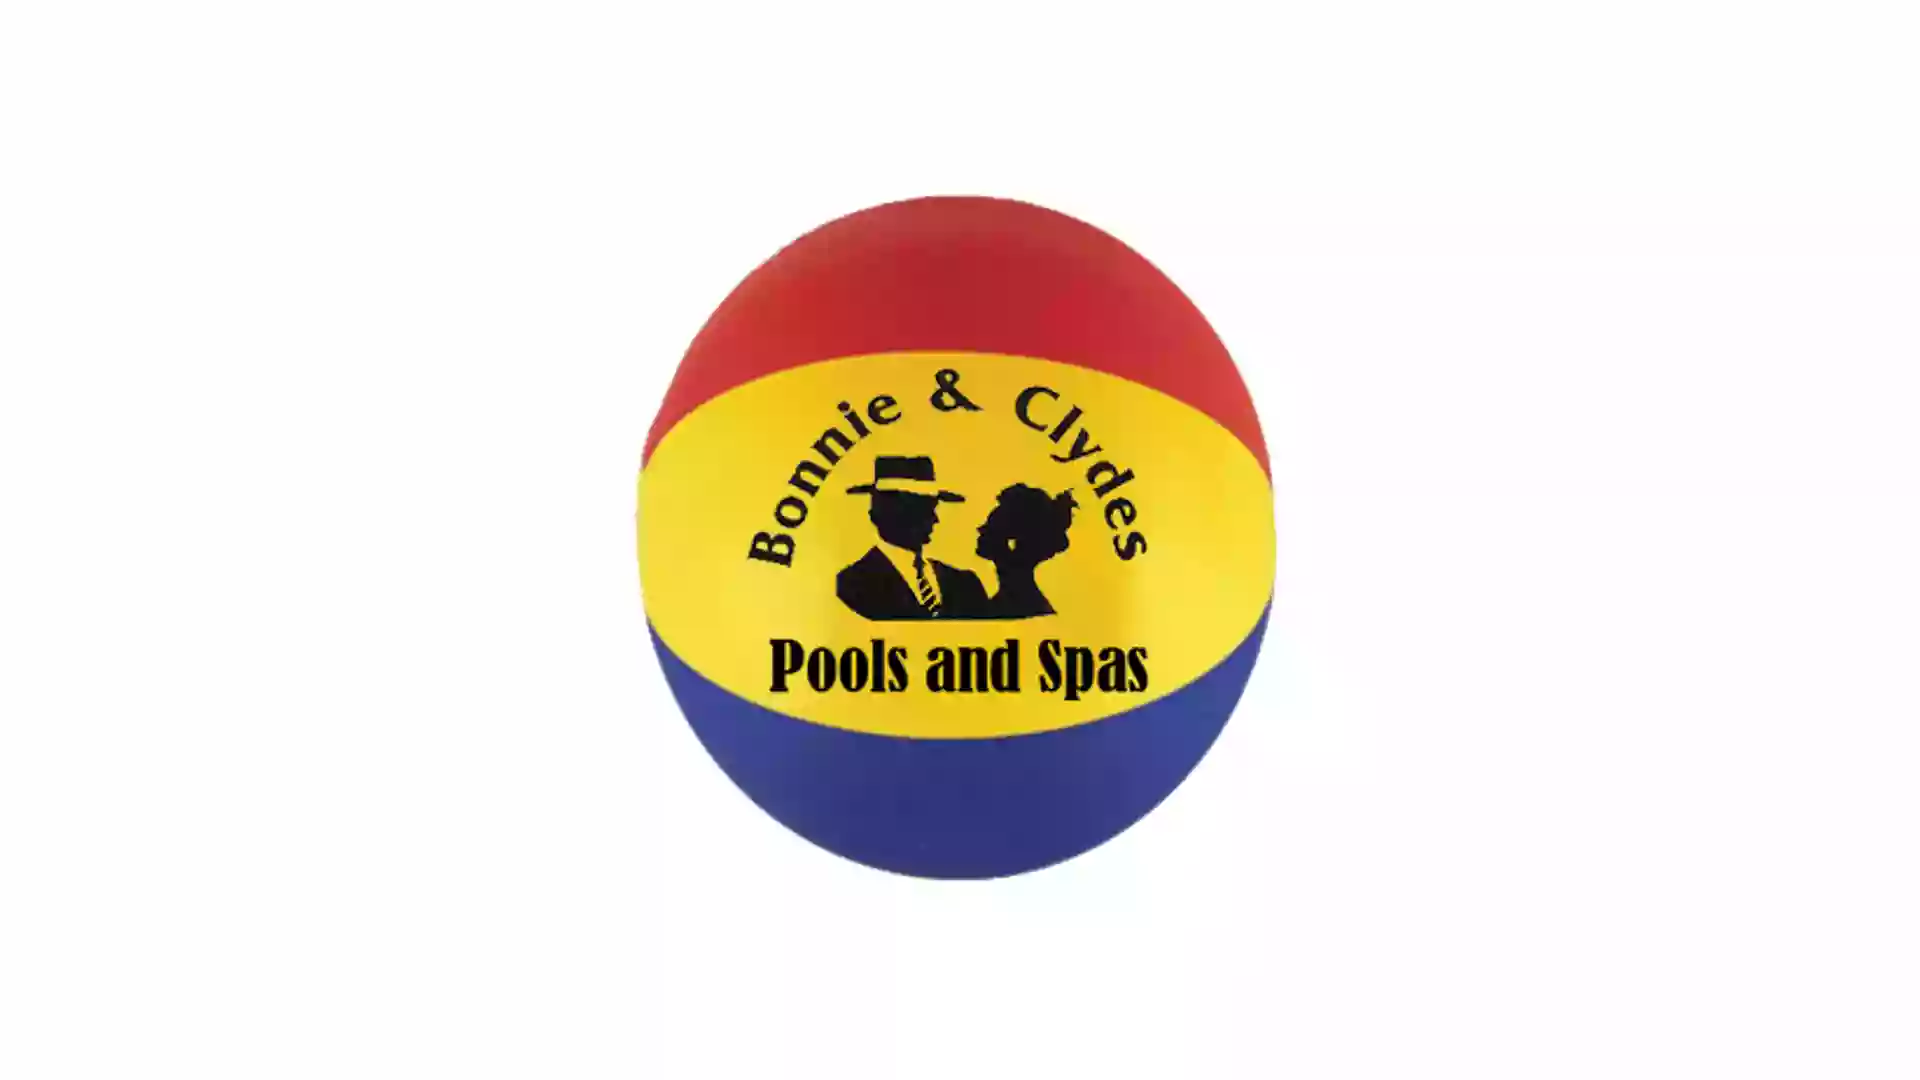 Bonnie & Clydes Pools and Spas